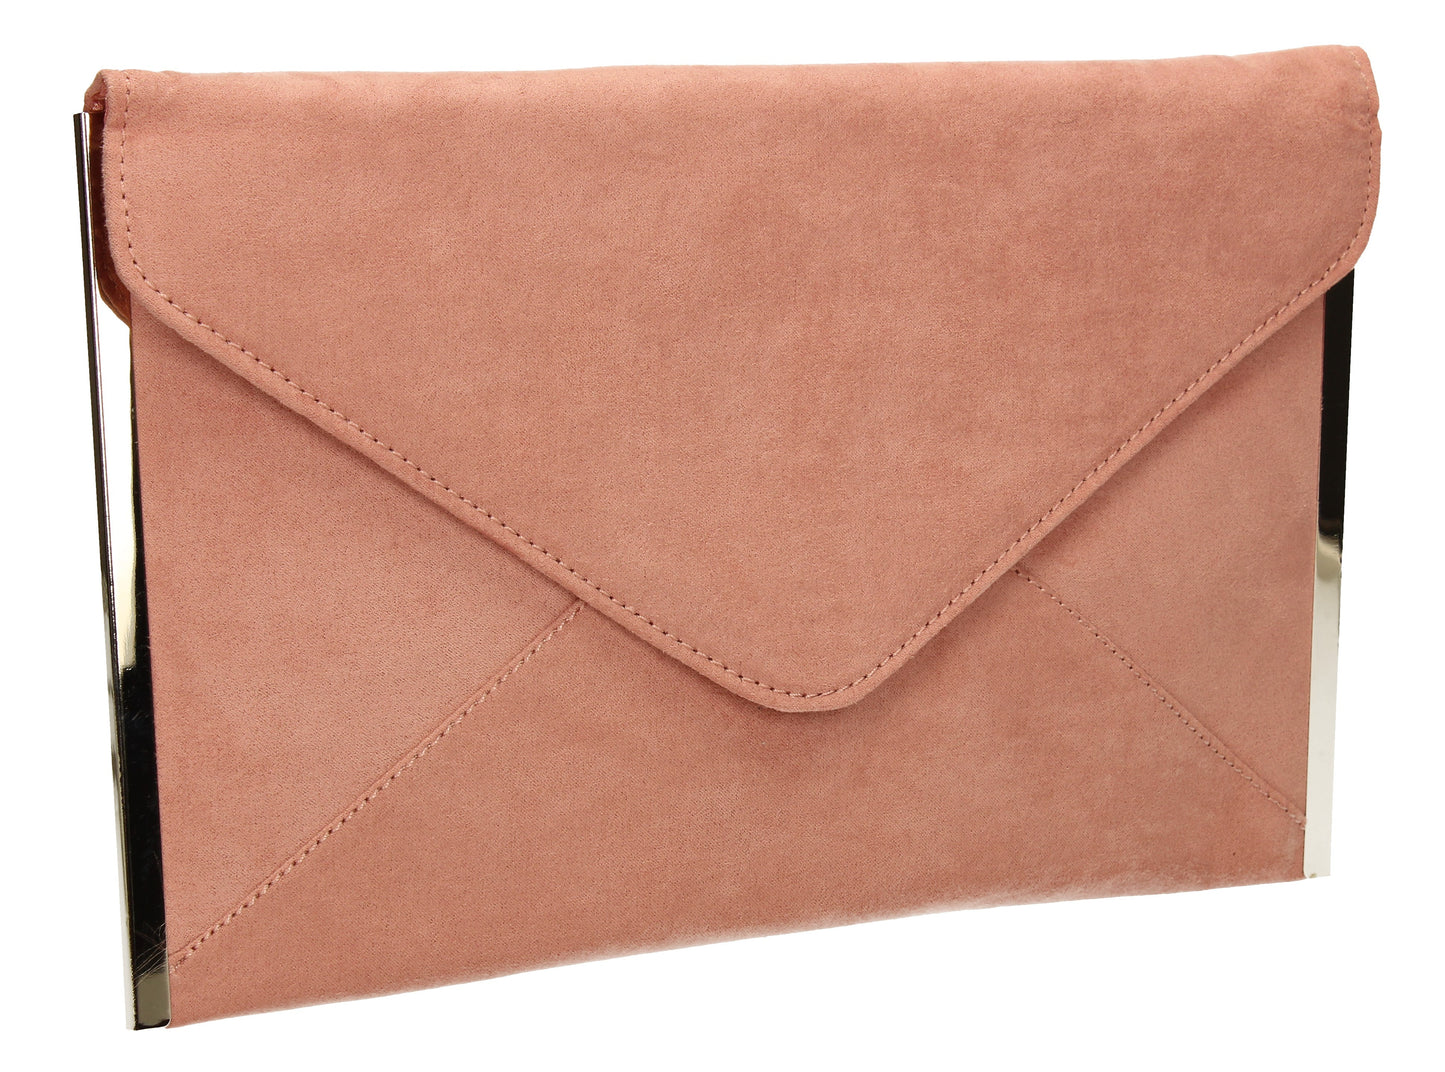 SWANKYSWANS Louis Clutch Bag Blush Cute Cheap Clutch Bag For Weddings School and Work